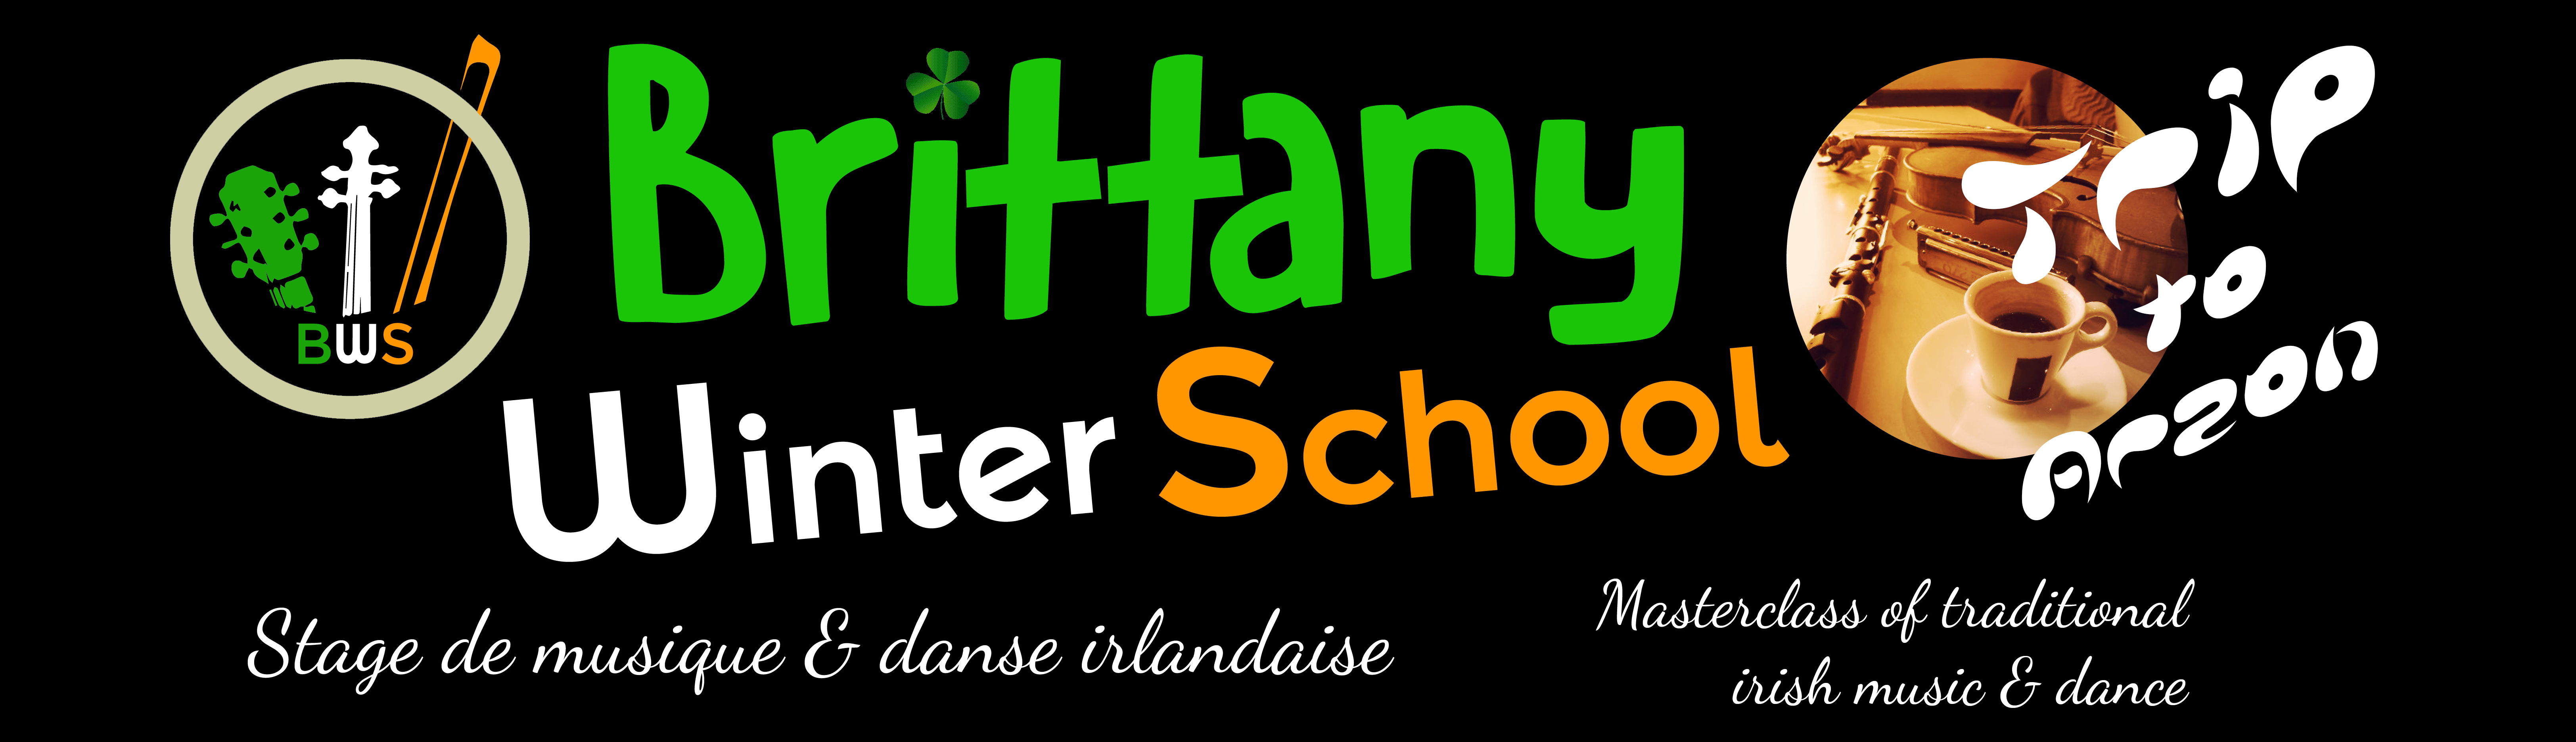 Brittany Winter School - [SITE OFFICIEL] Logo